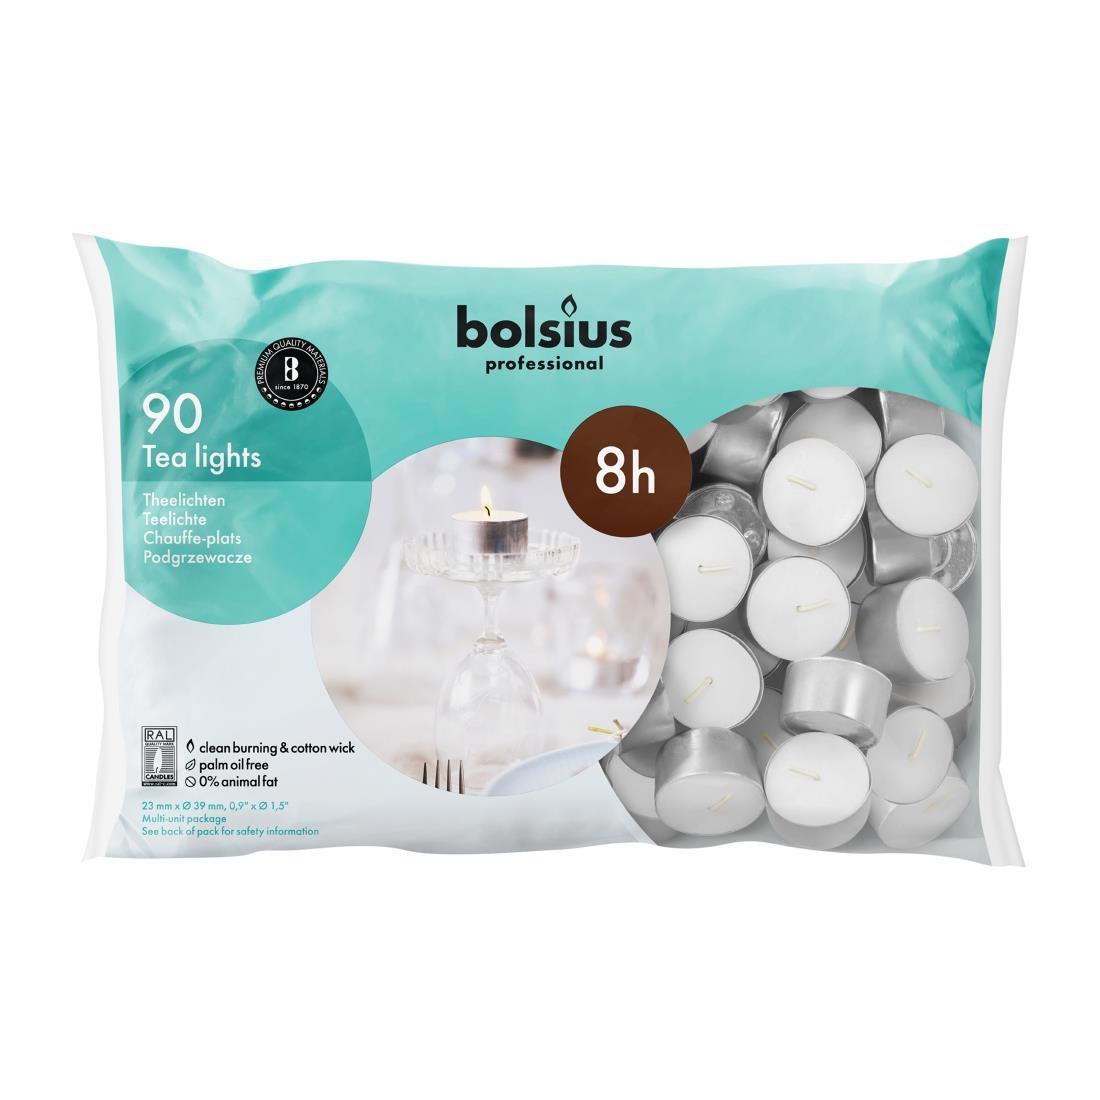 Bolsius Professional 8 Hour Tealights (Pack of 90) - DJ759  - 2